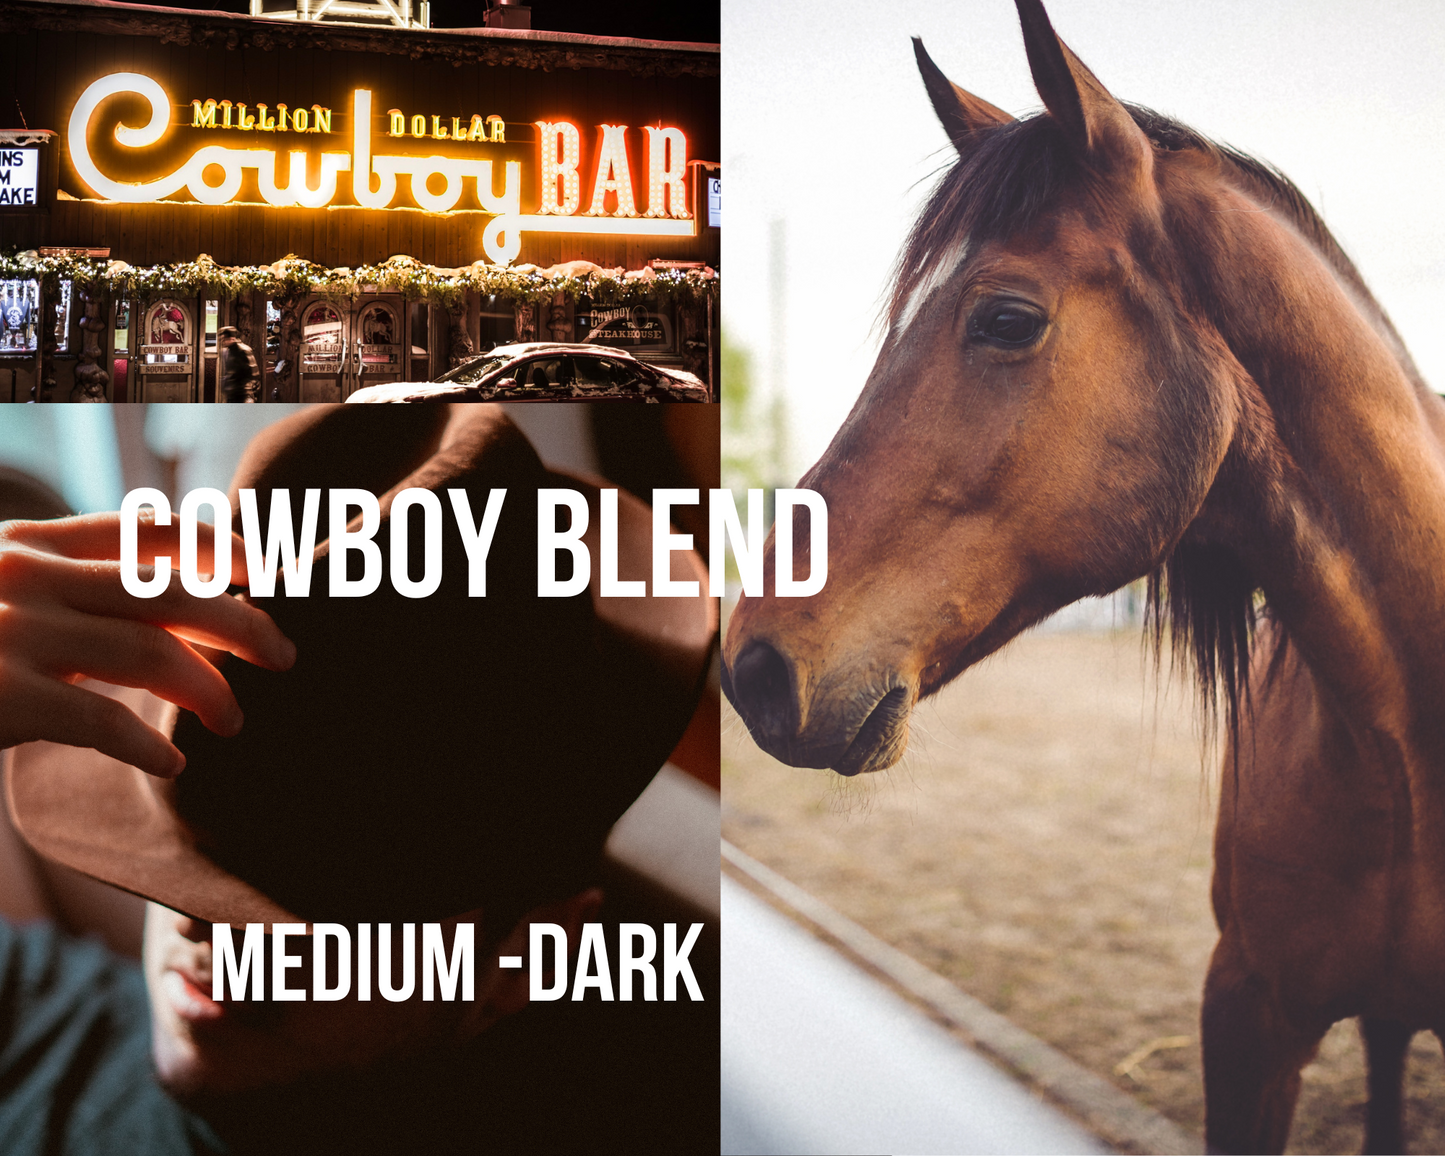 Coffee-Cowboy Blend